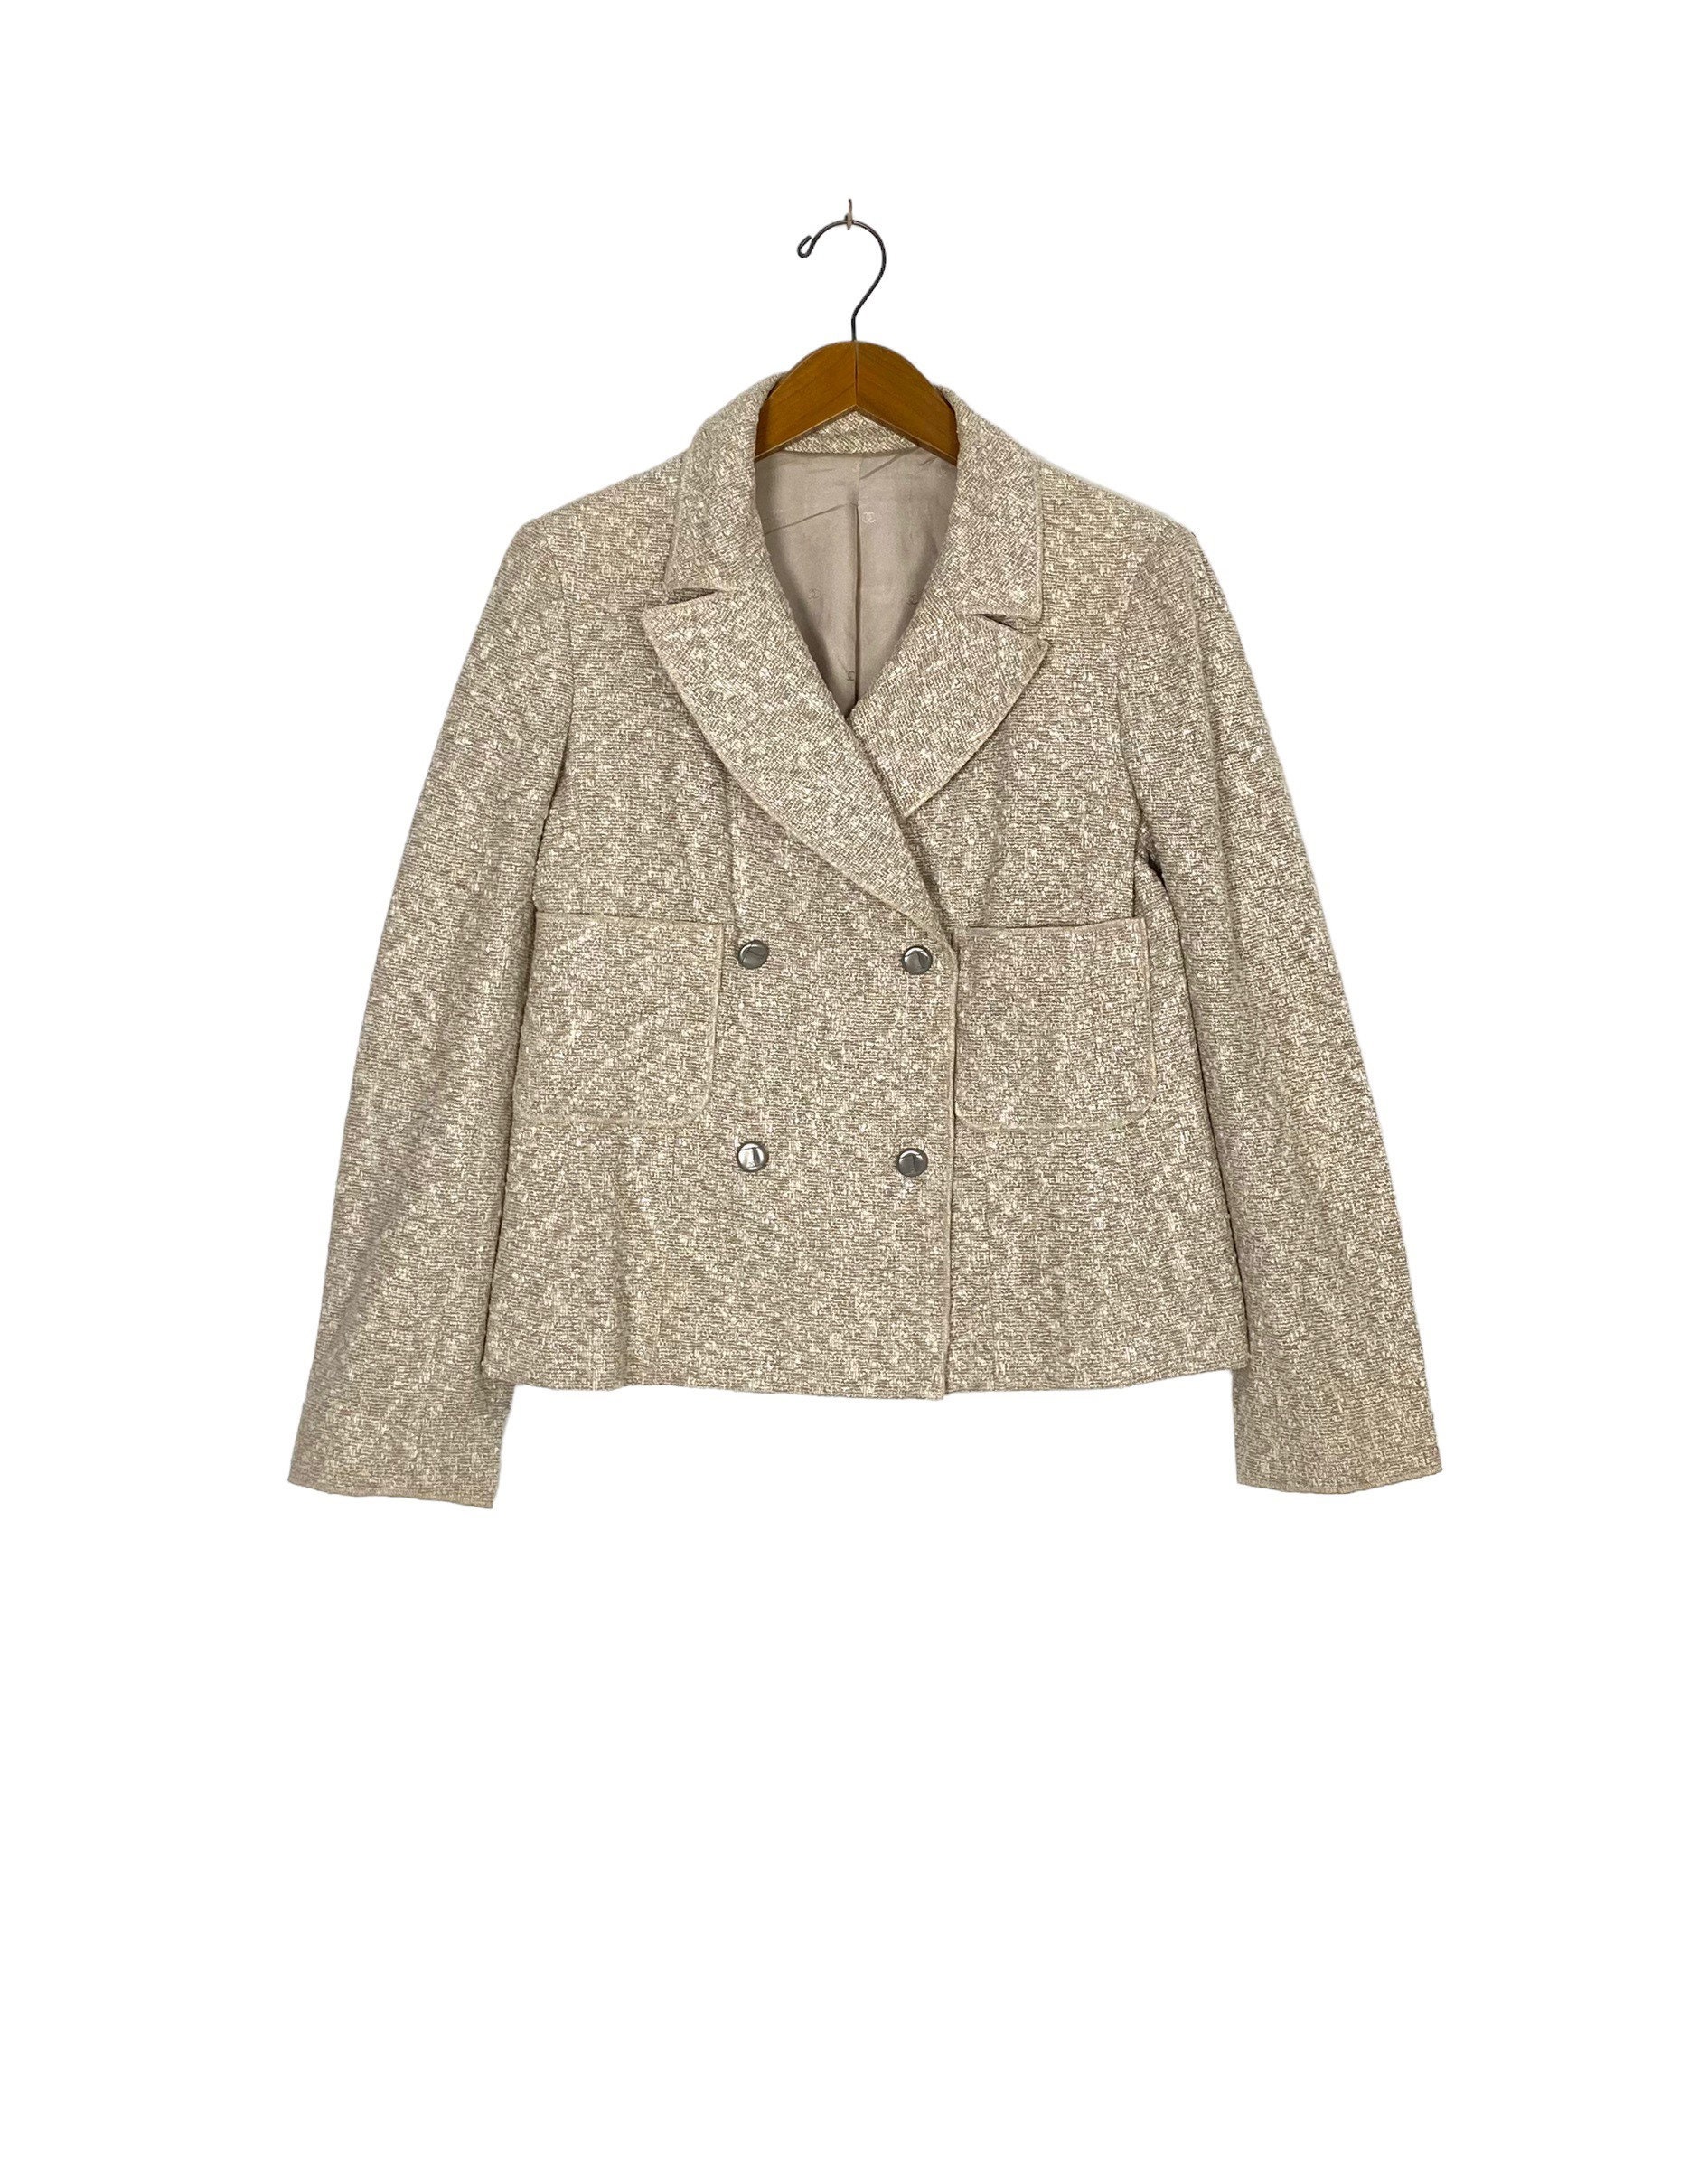 CHANEL, Jackets & Coats, Chanel Navy Classic Tweed Jacket Blazer Sz 36